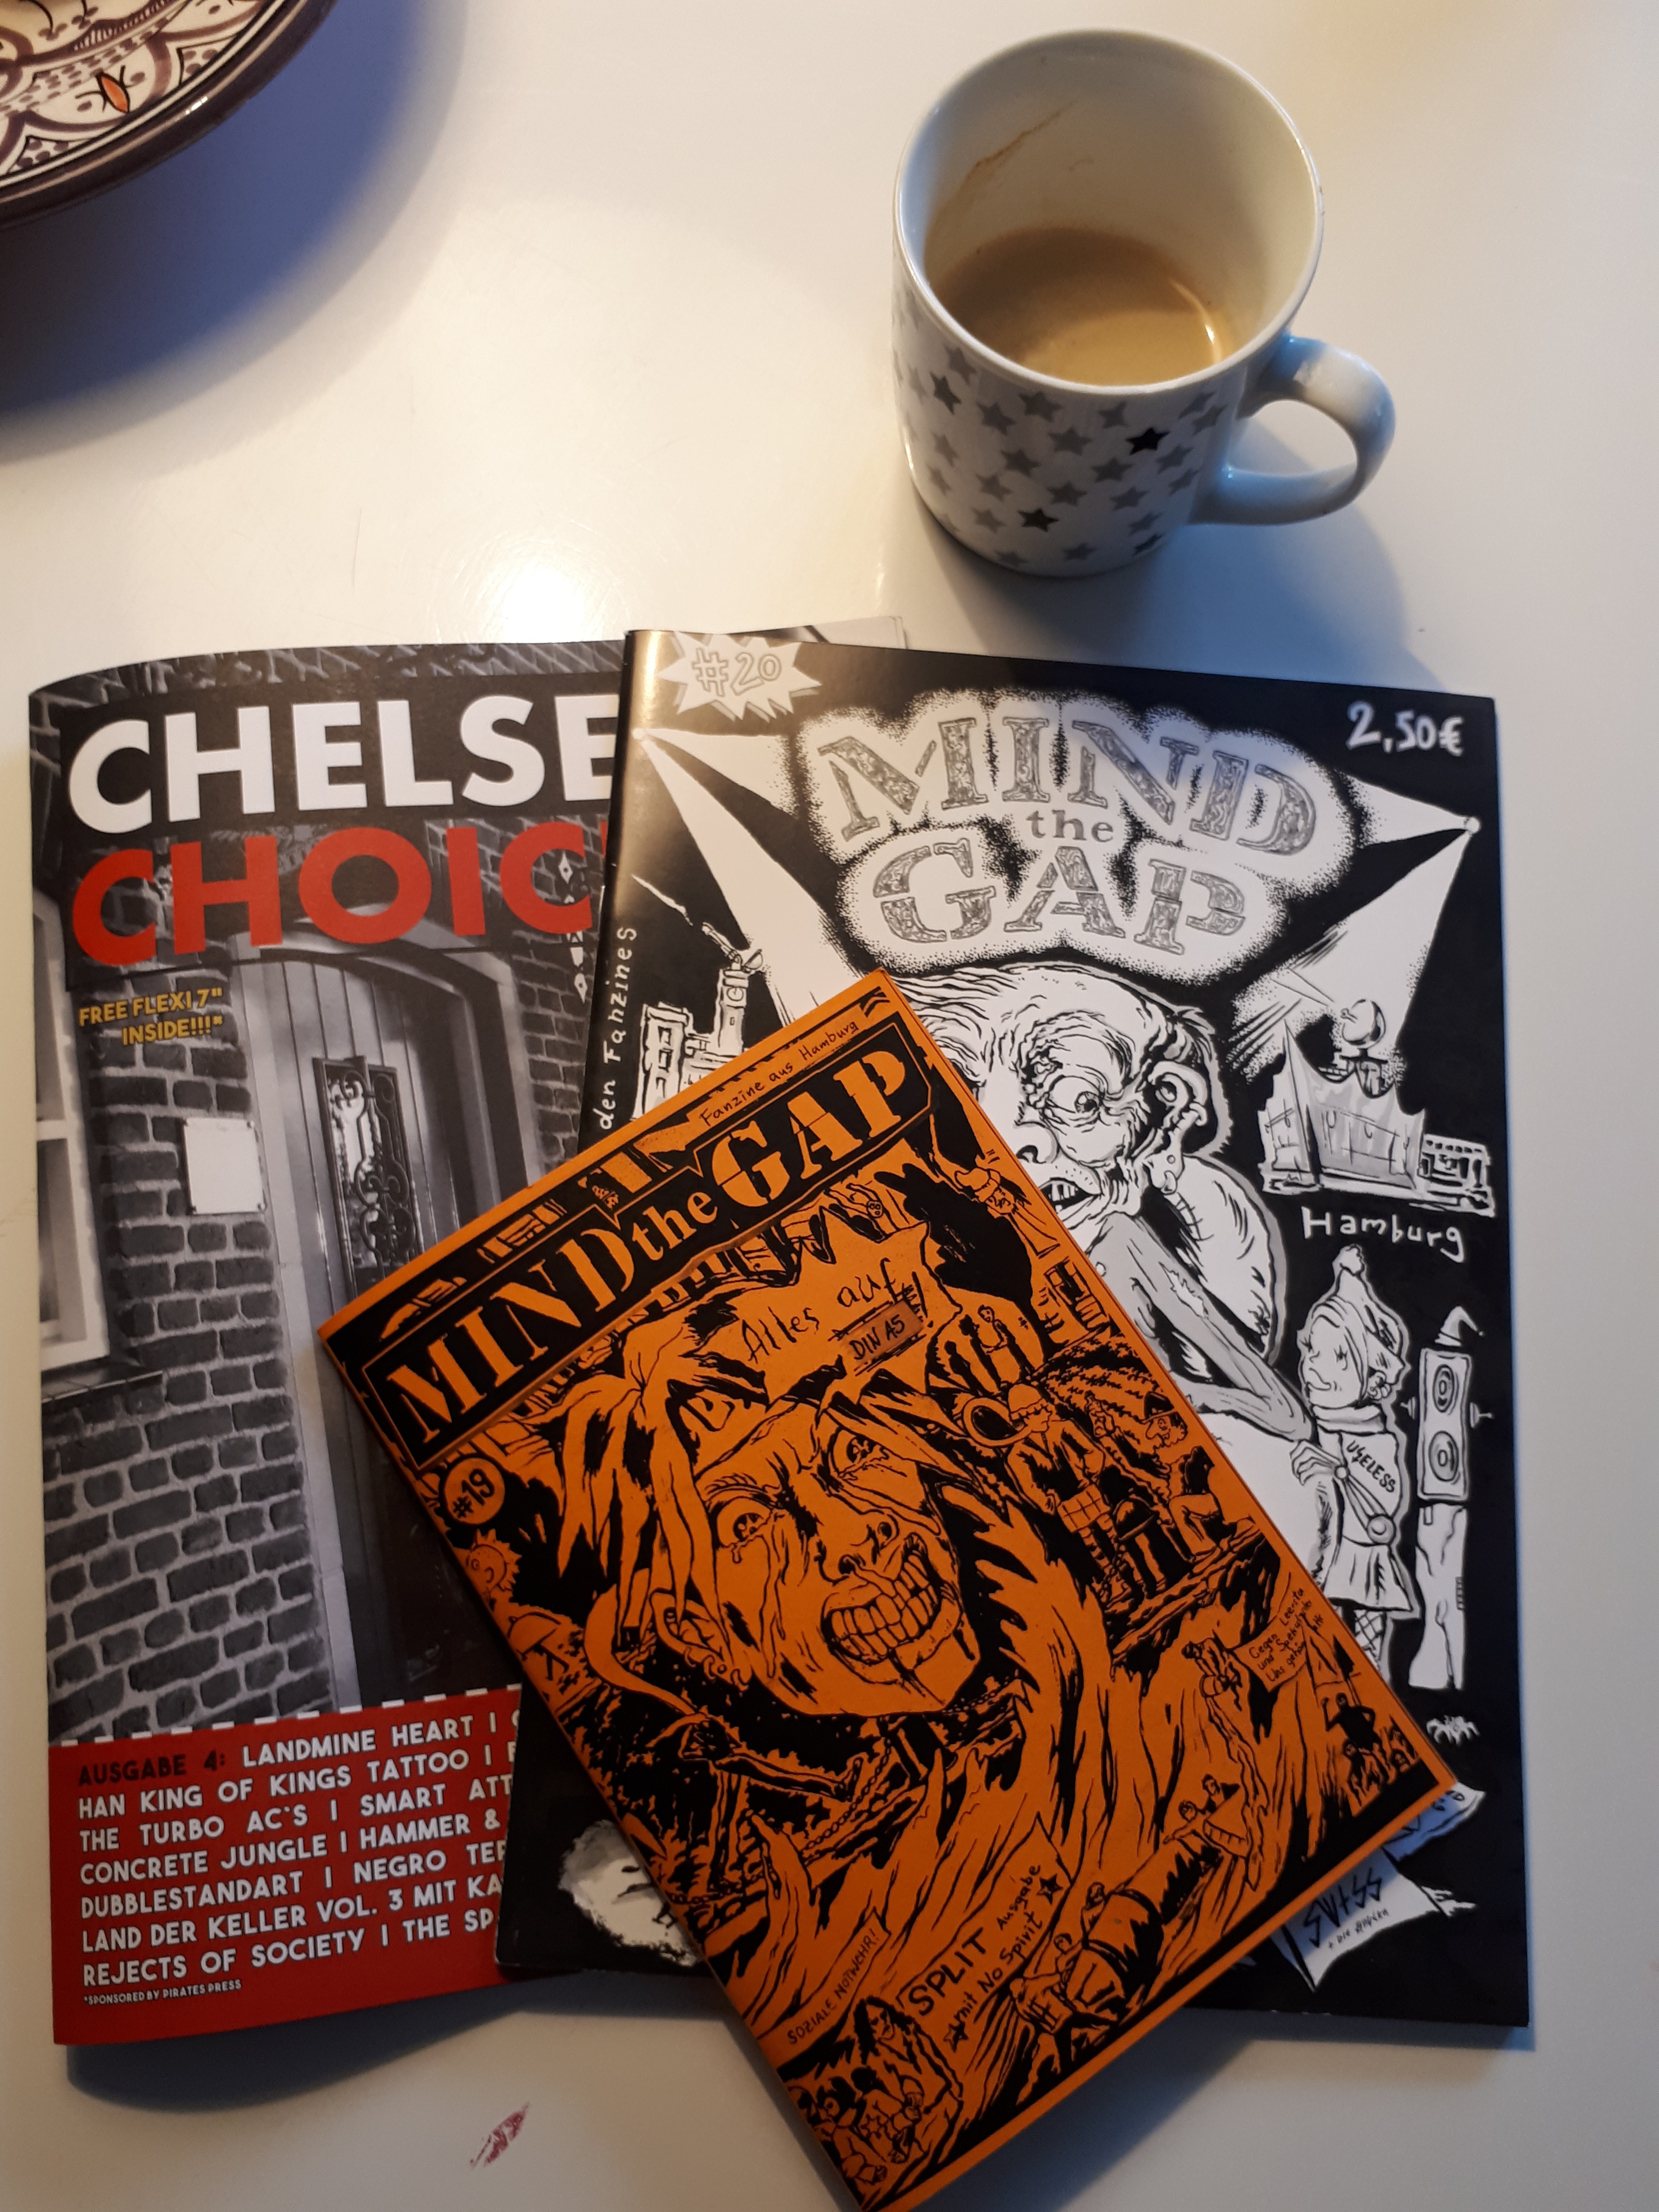 Chelseas_choice_magazine_mind_the_gap_no_spirit